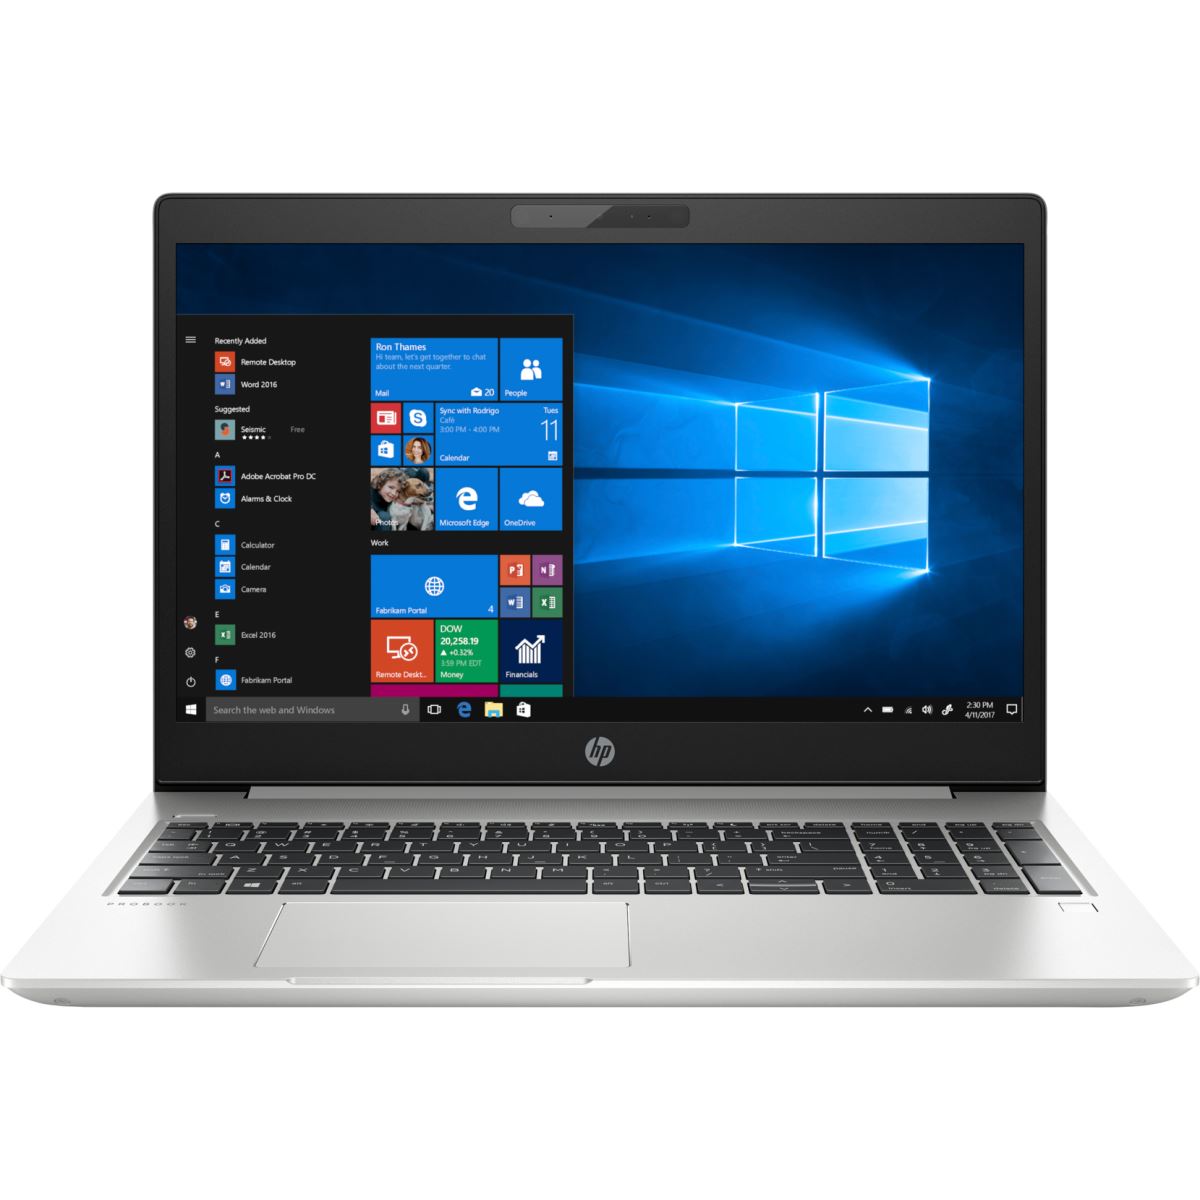 Laptop HP ProBook 450 G6, 15.6”, LED FHD Anti-Glare, Intel Core i5-8265U Quad Core, RAM 8GB DDR4, HDD 500GB + 16GB Pcle, Windows 10 PRO 64bit